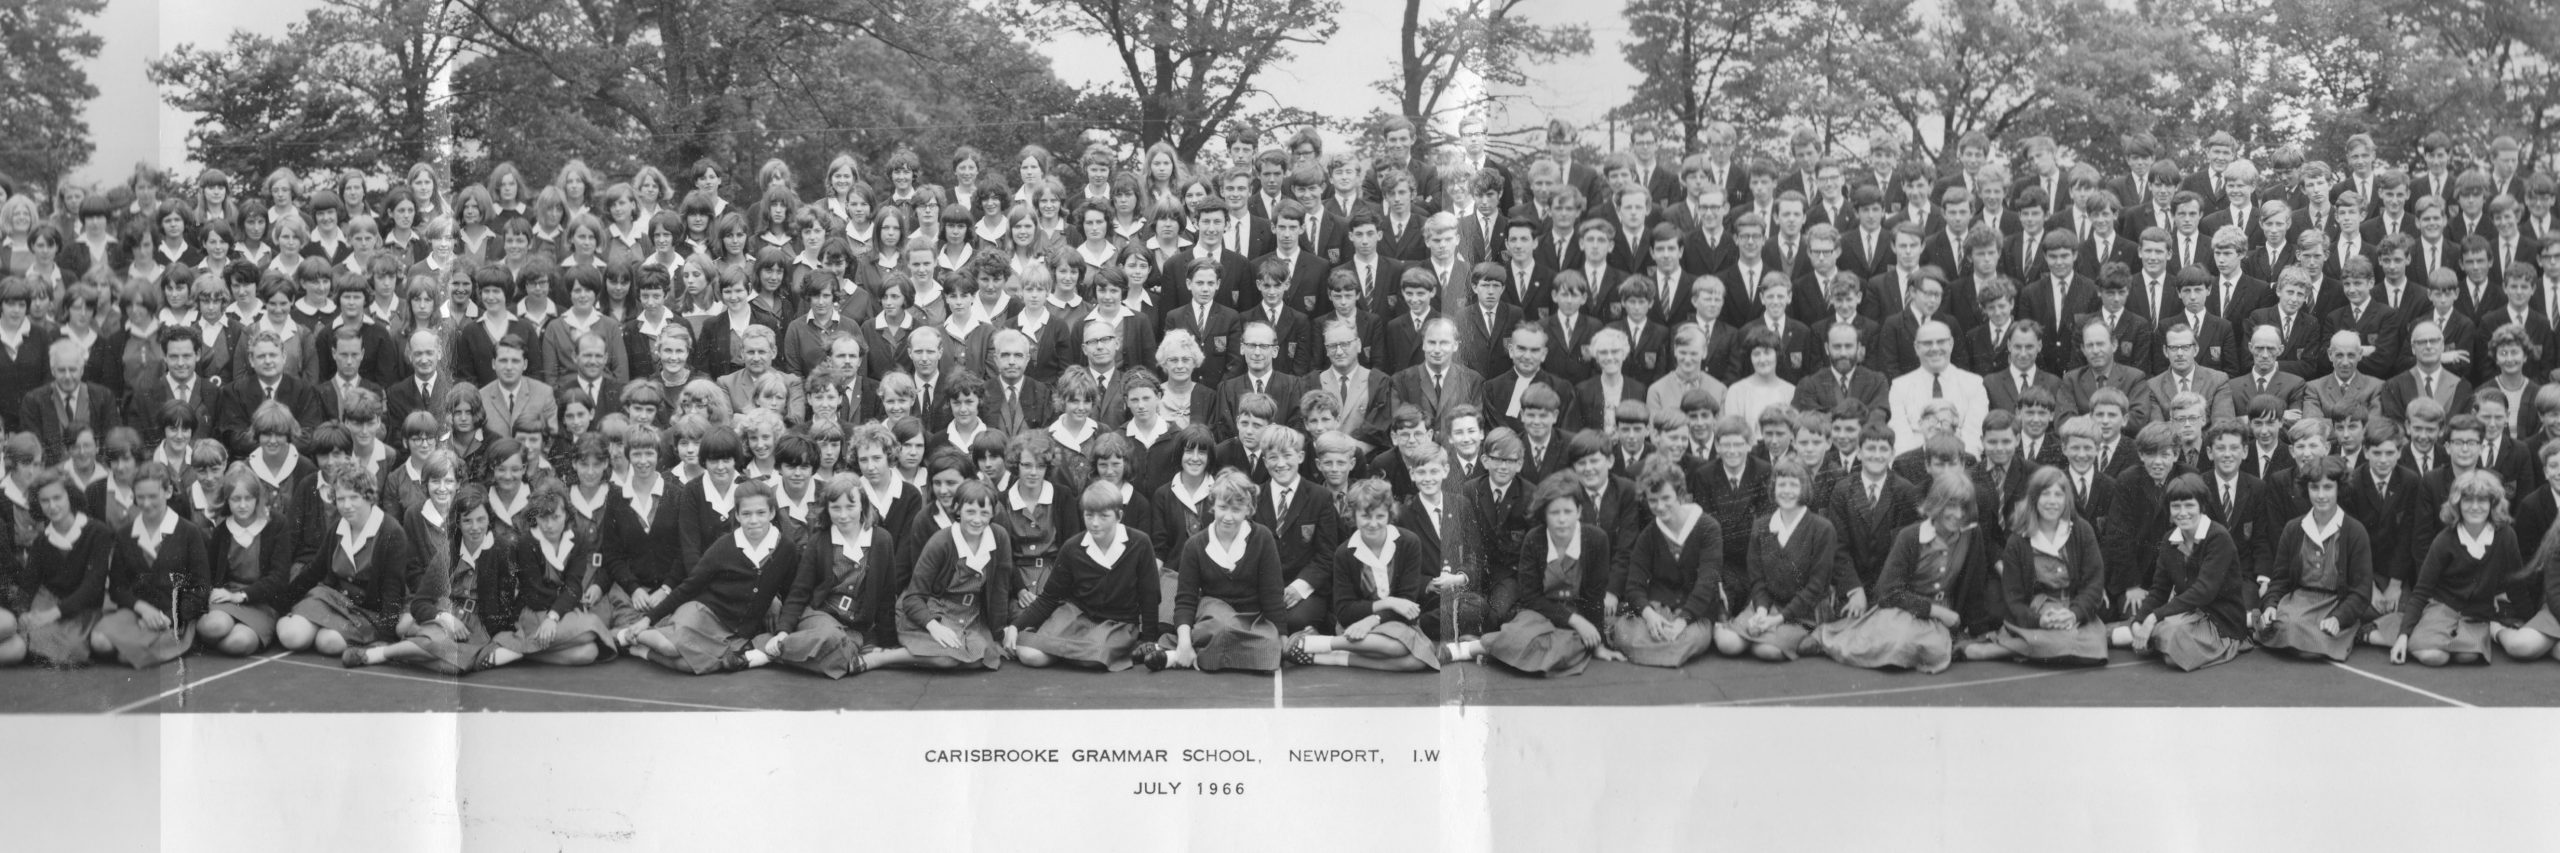 Carisbrooke Grammar 1966